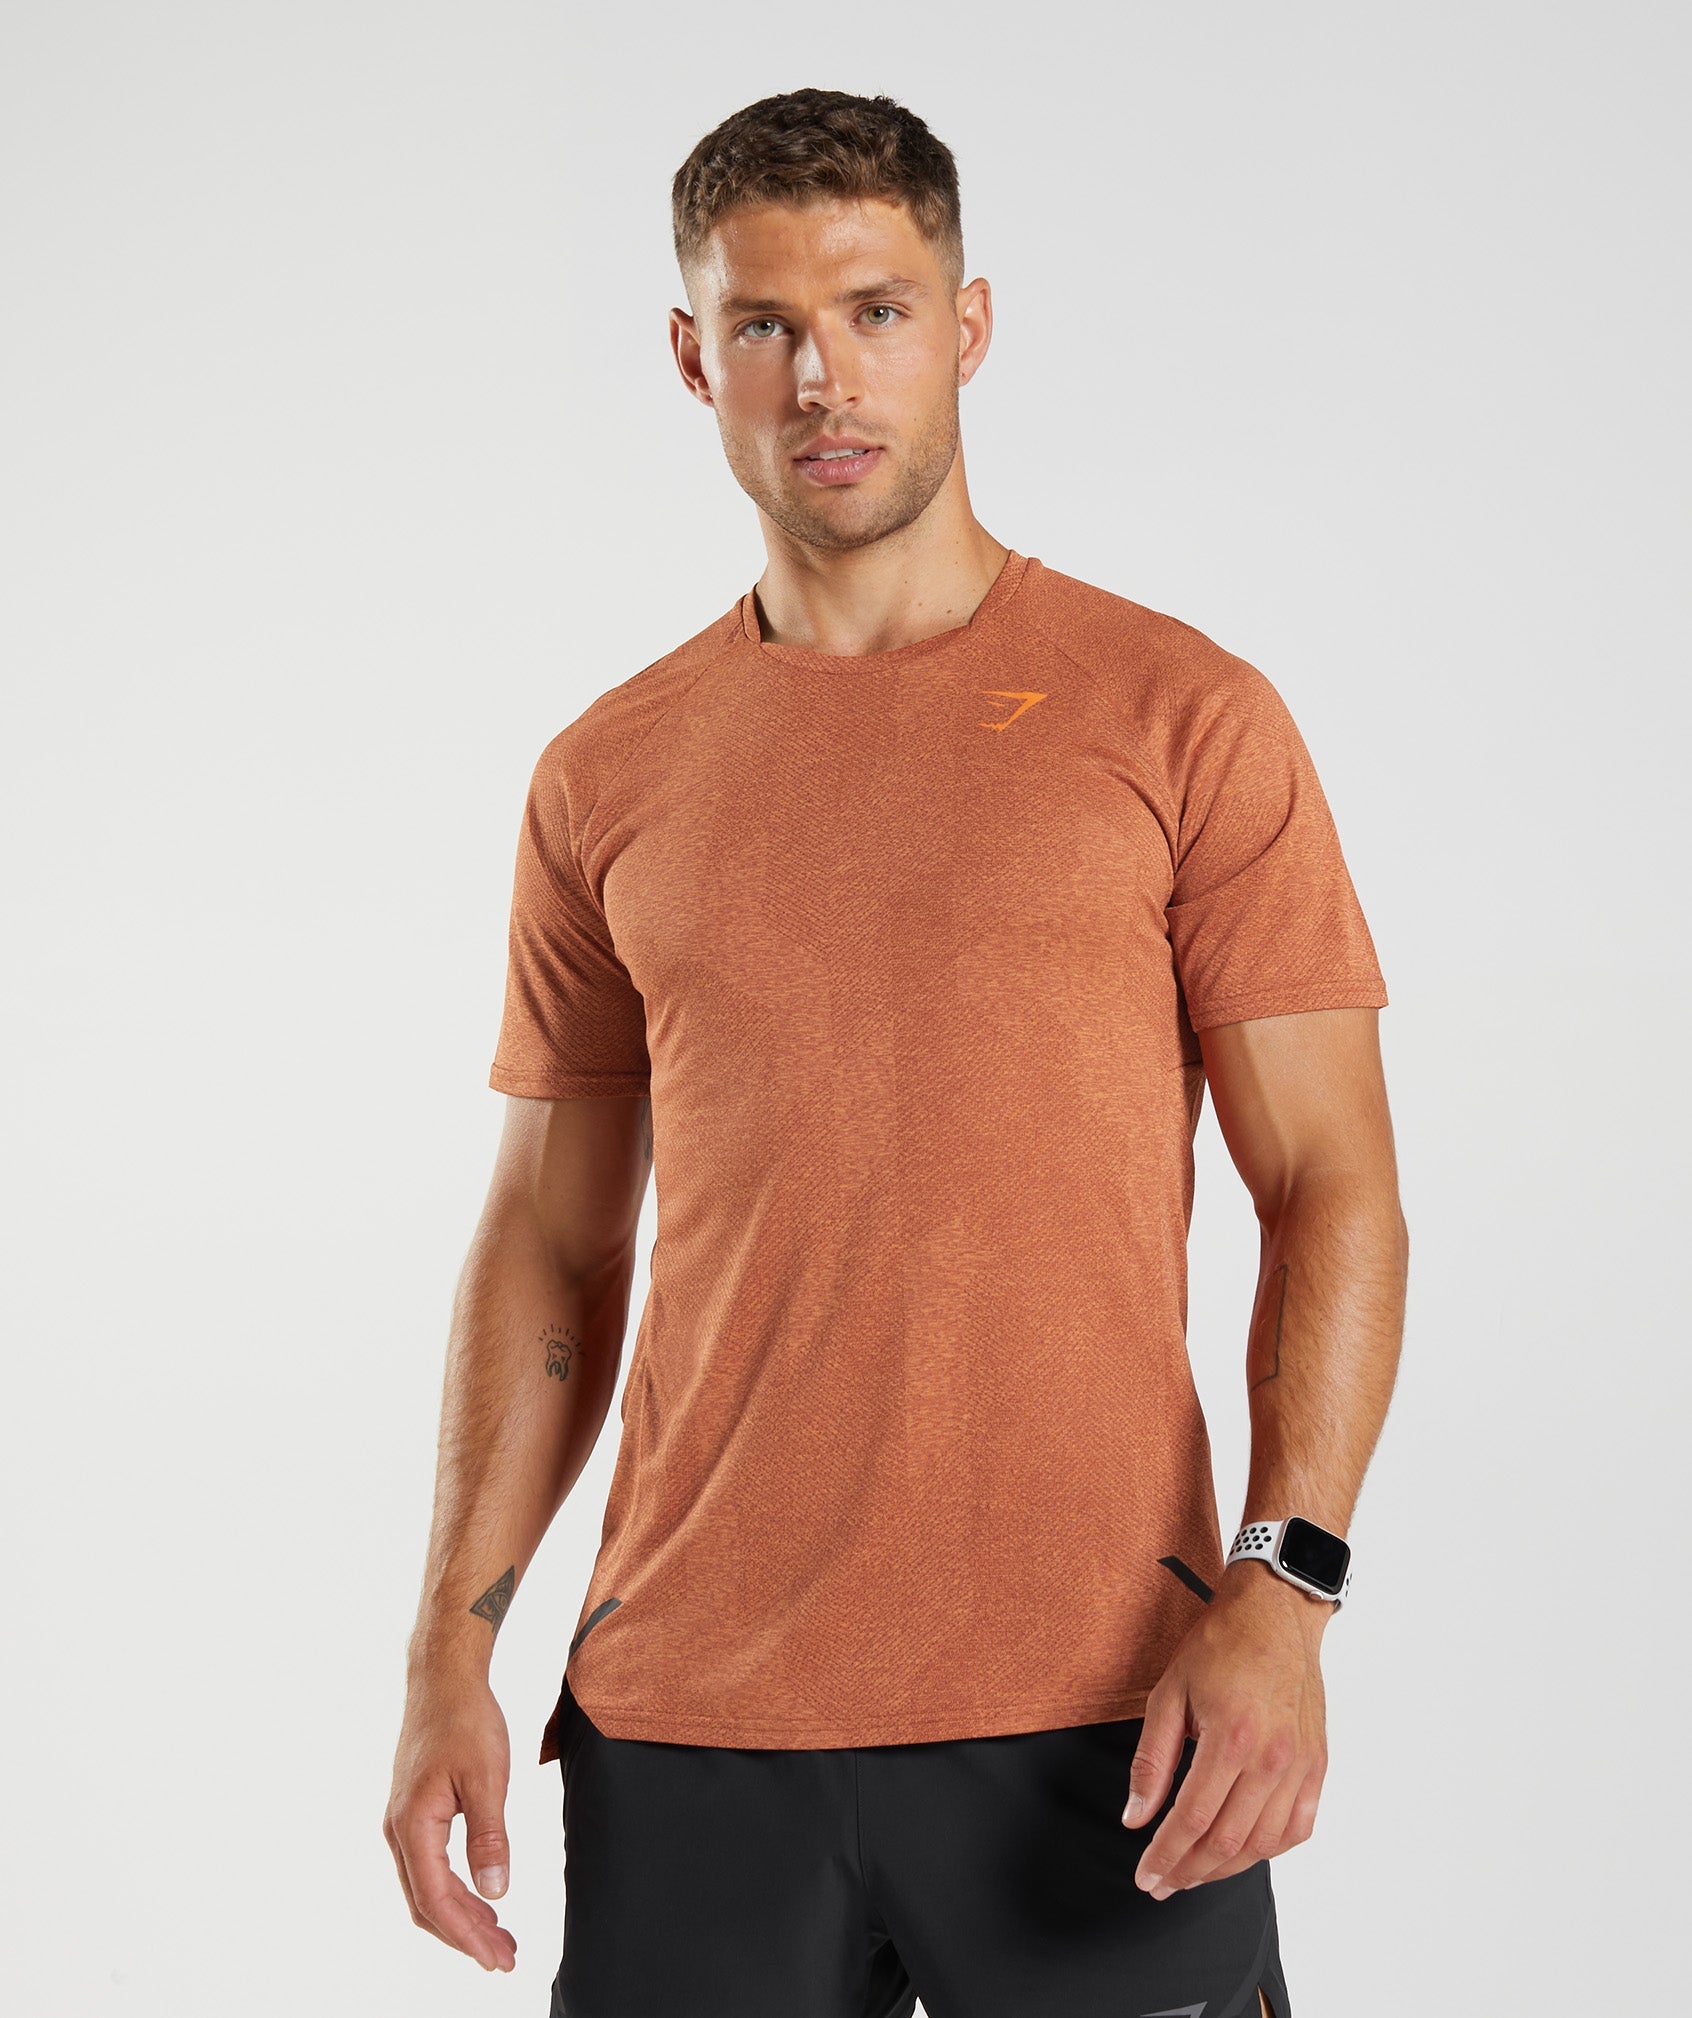 Apex T-Shirt in Mahogany Brown/Zesty Orange - view 1